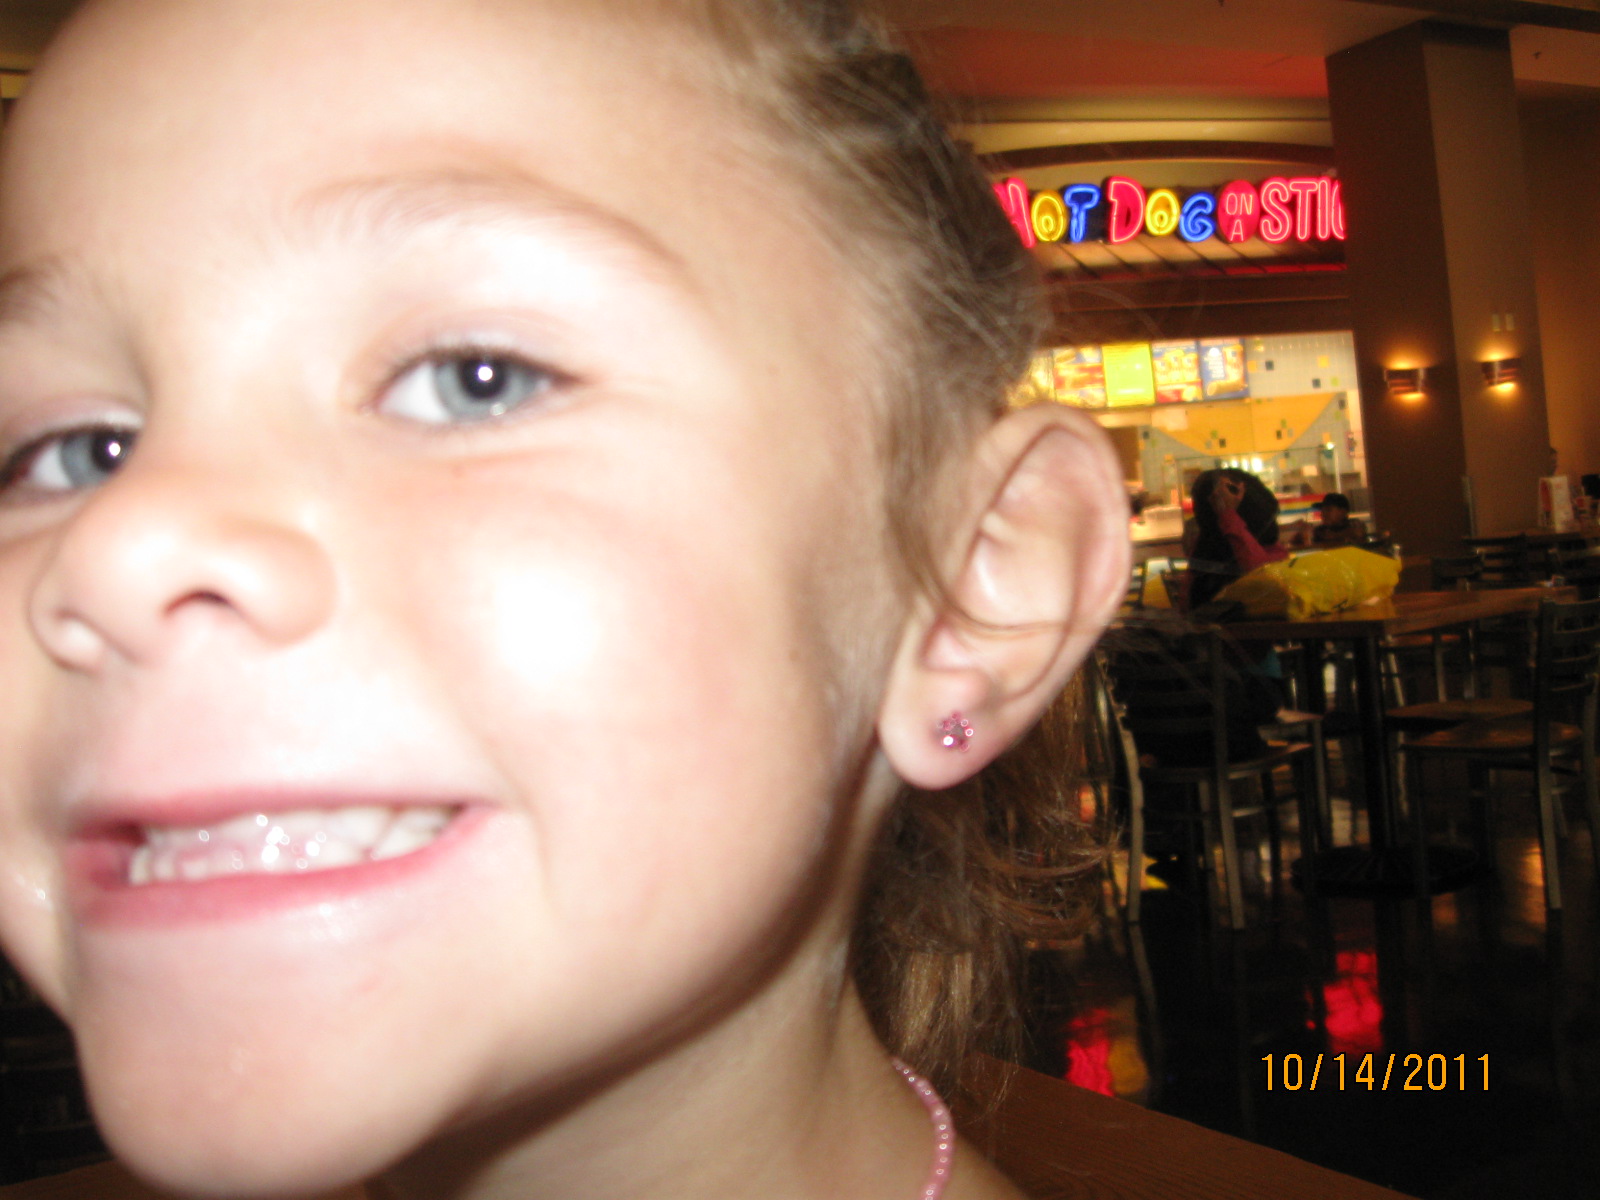 Caymans Ear piercing! 